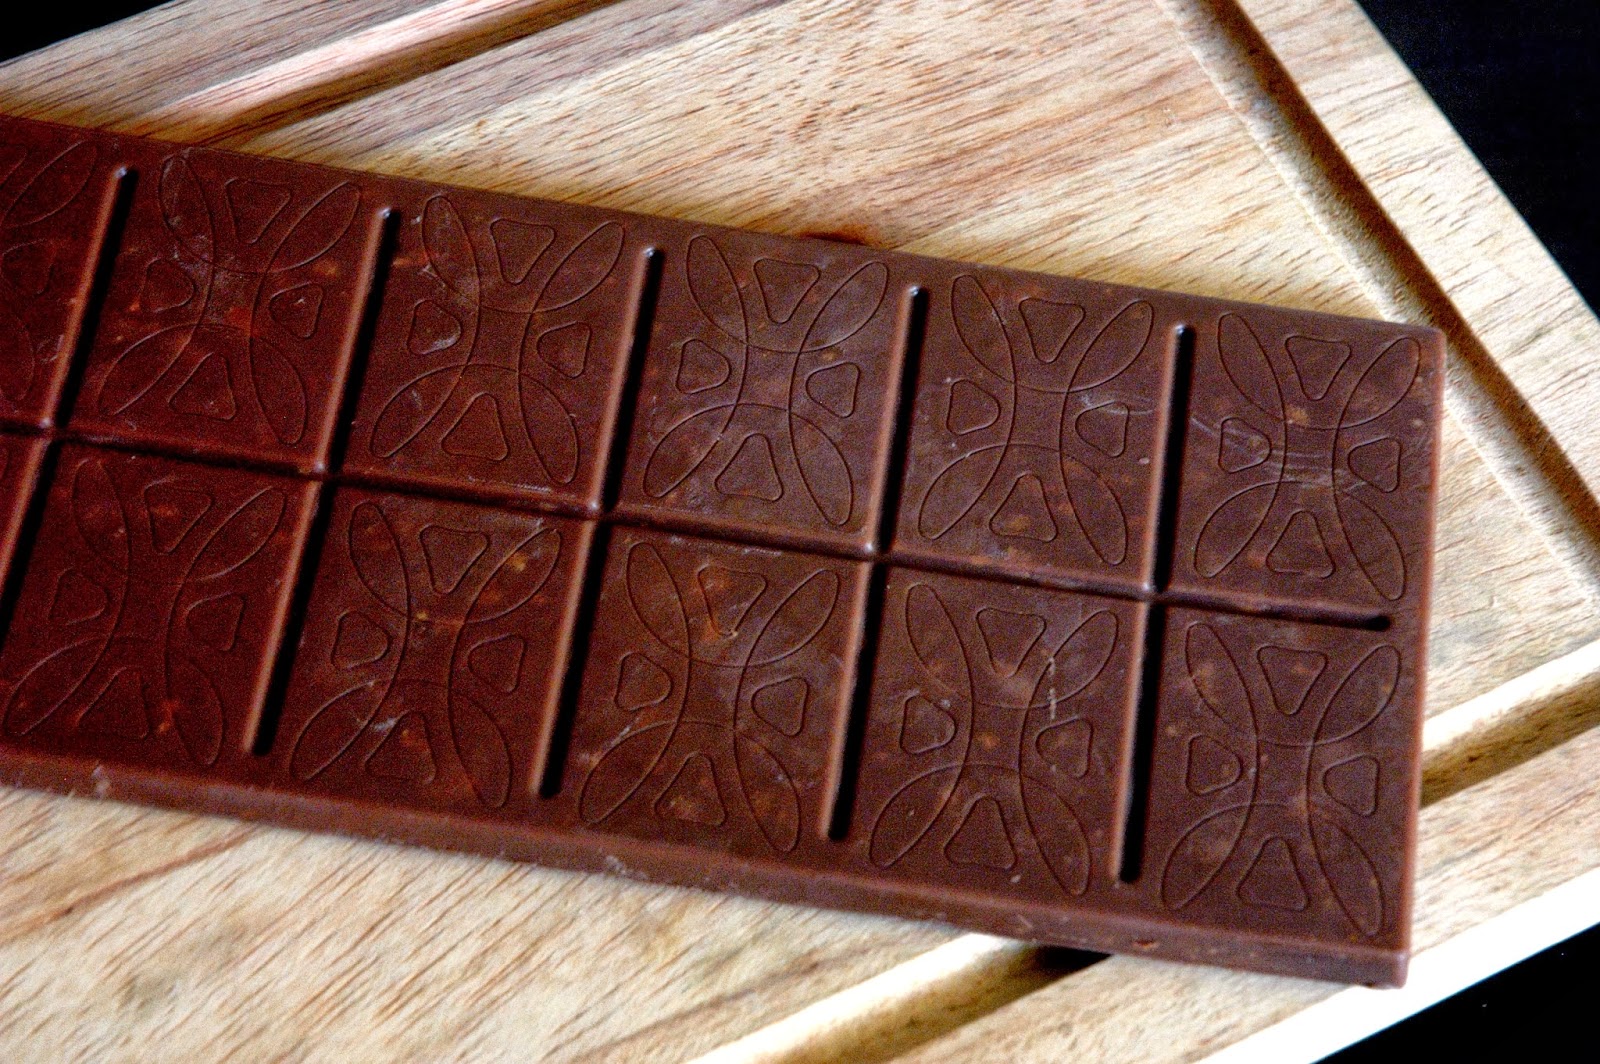 VALOR Pure Chocolate